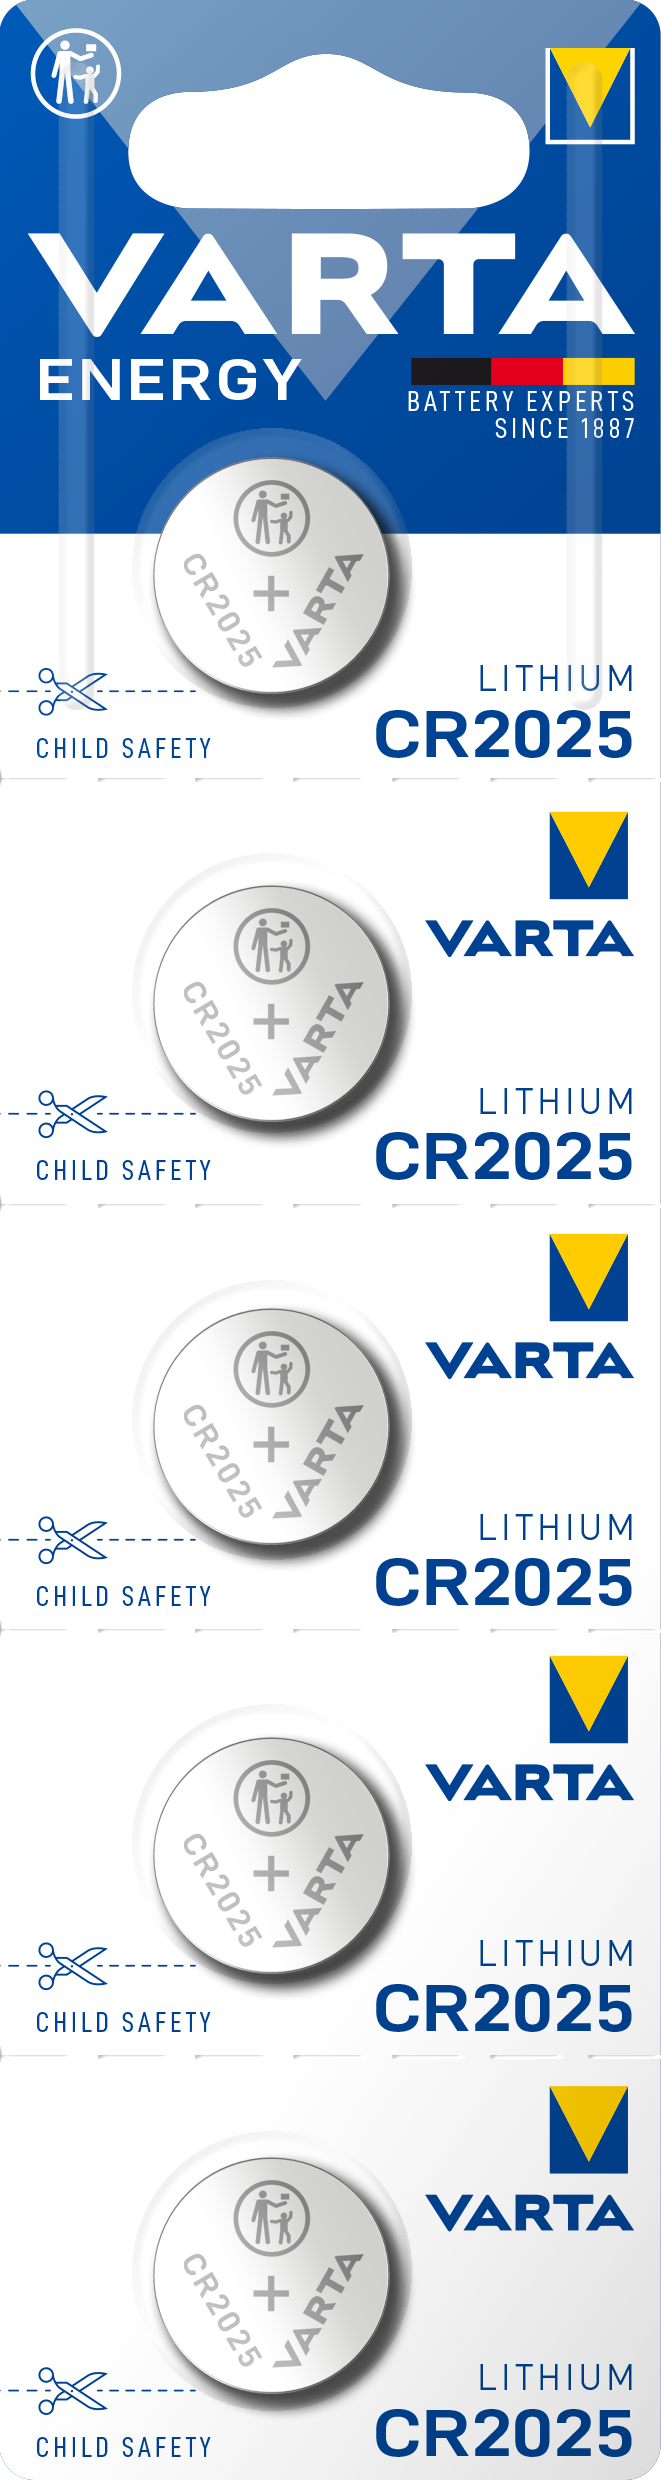 VARTA - Lithium - 2025 Pack of 5 Perforated